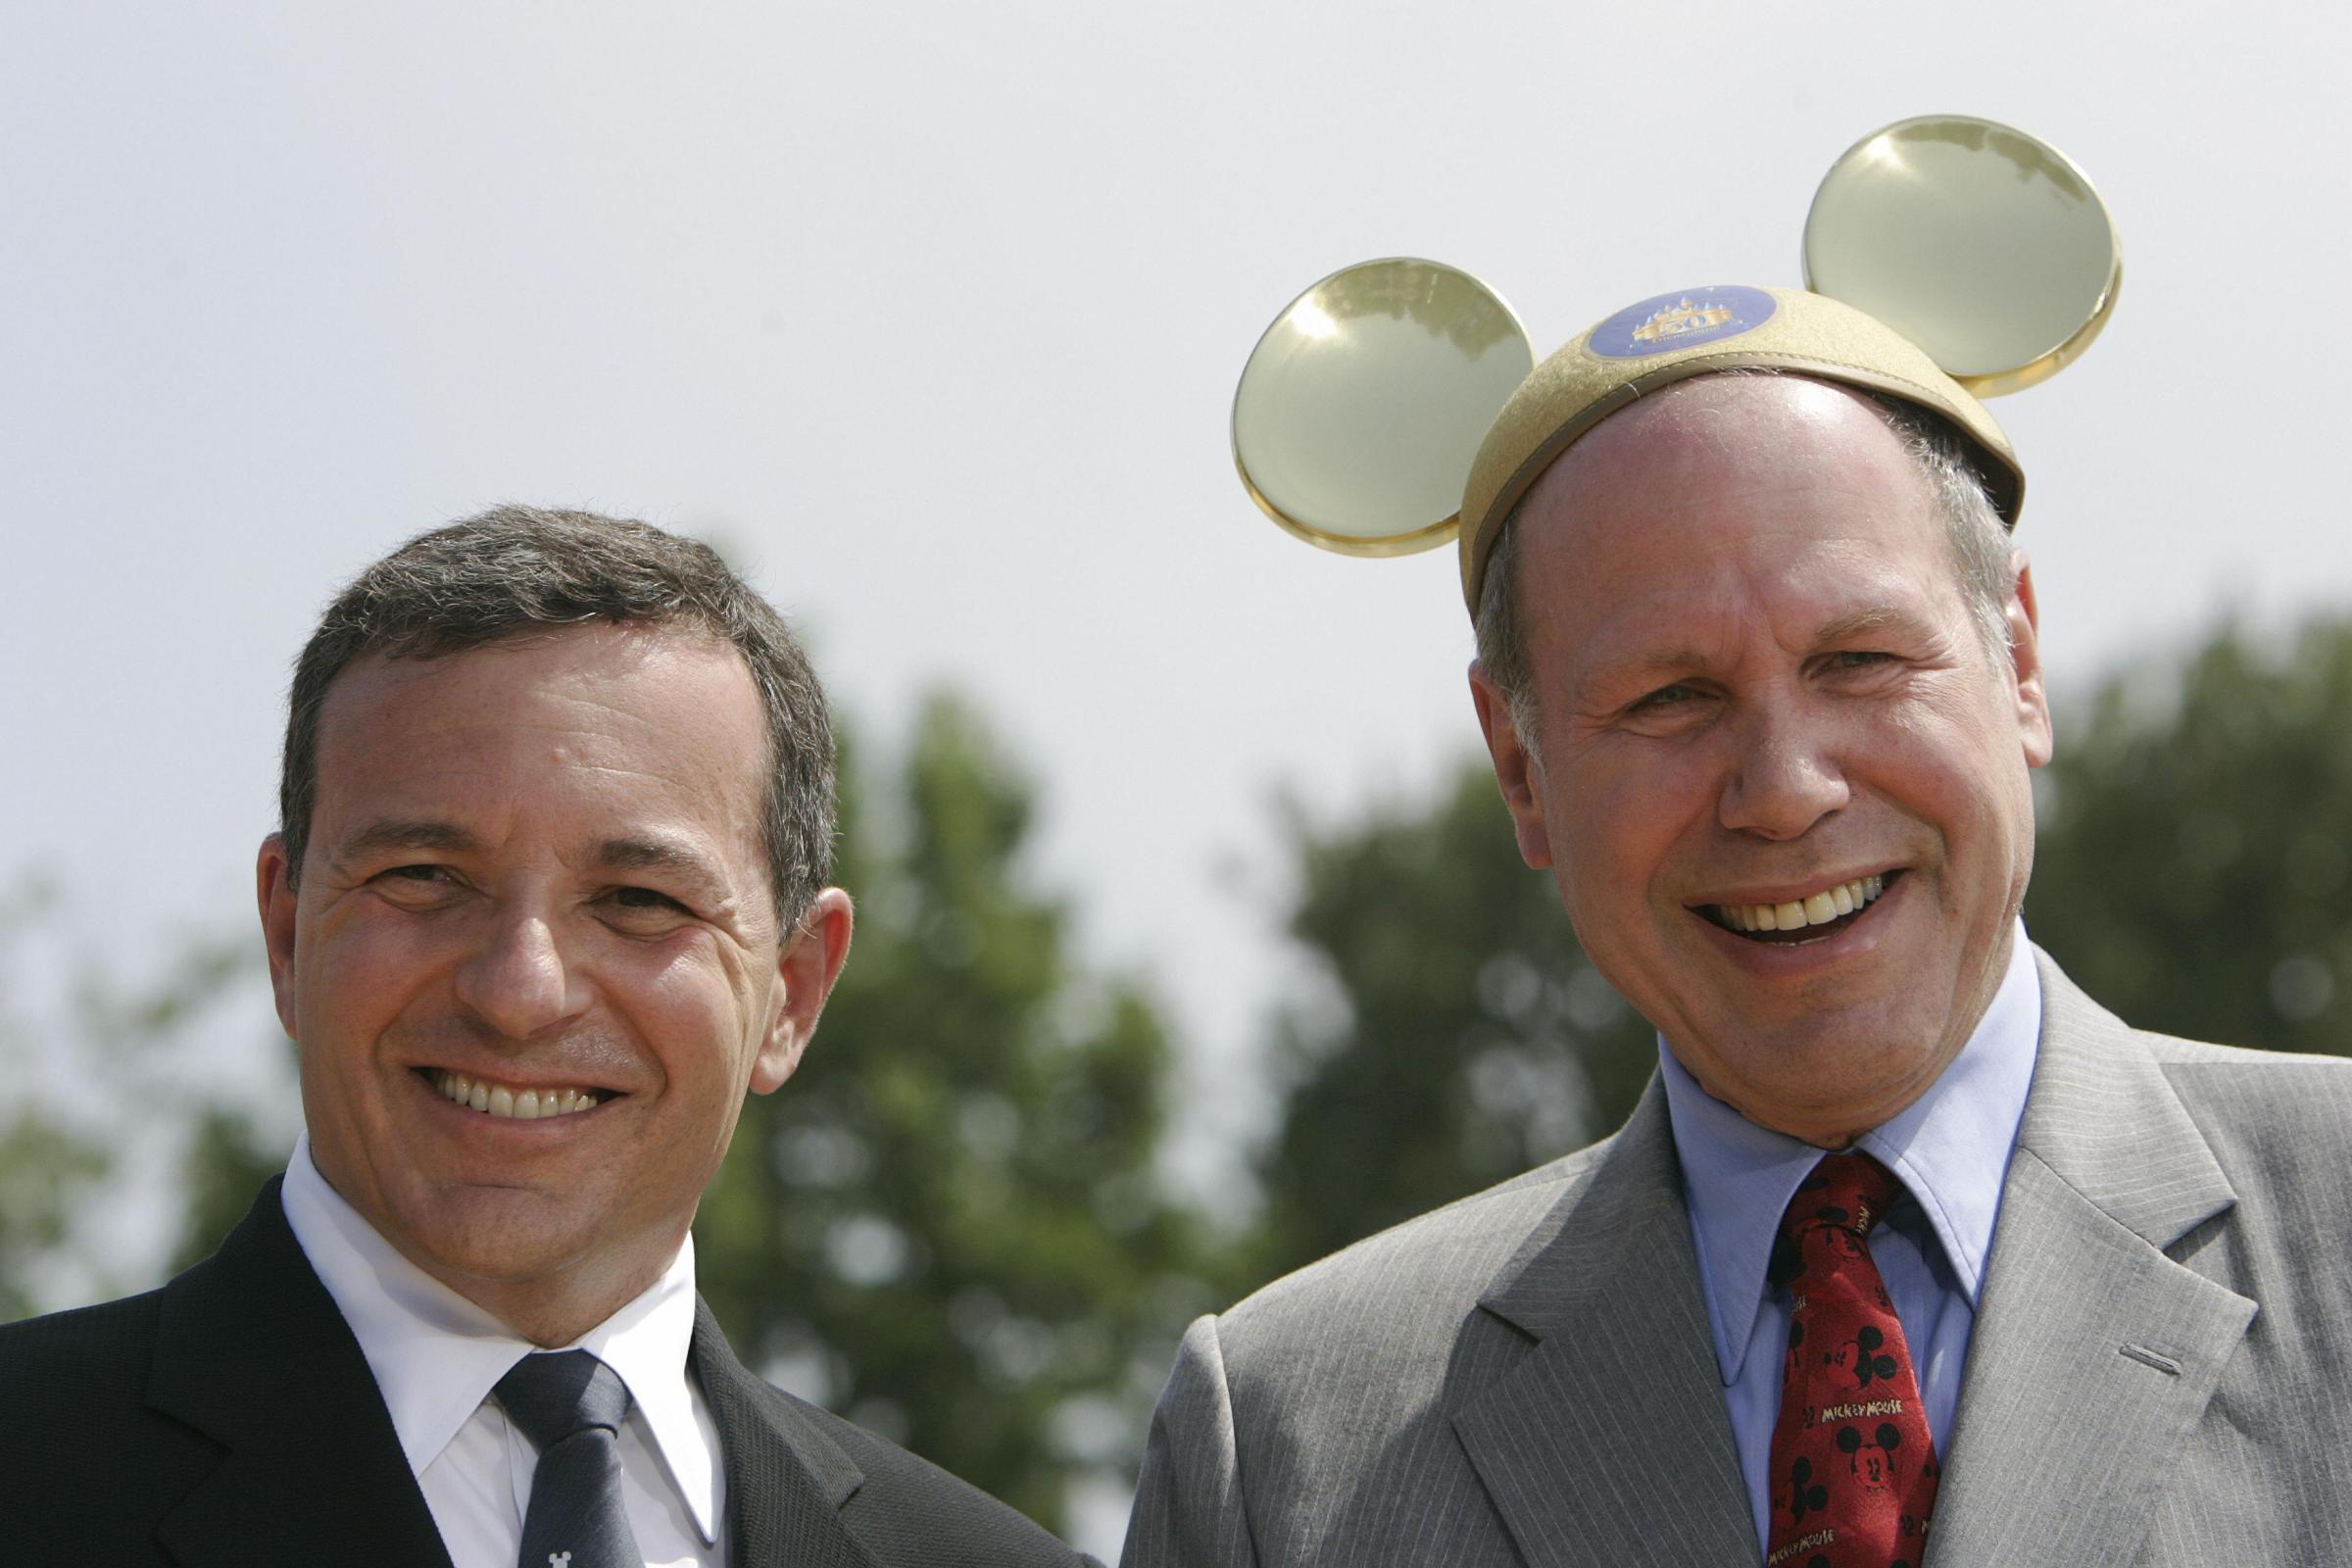 Disney CEO Michael Eisner